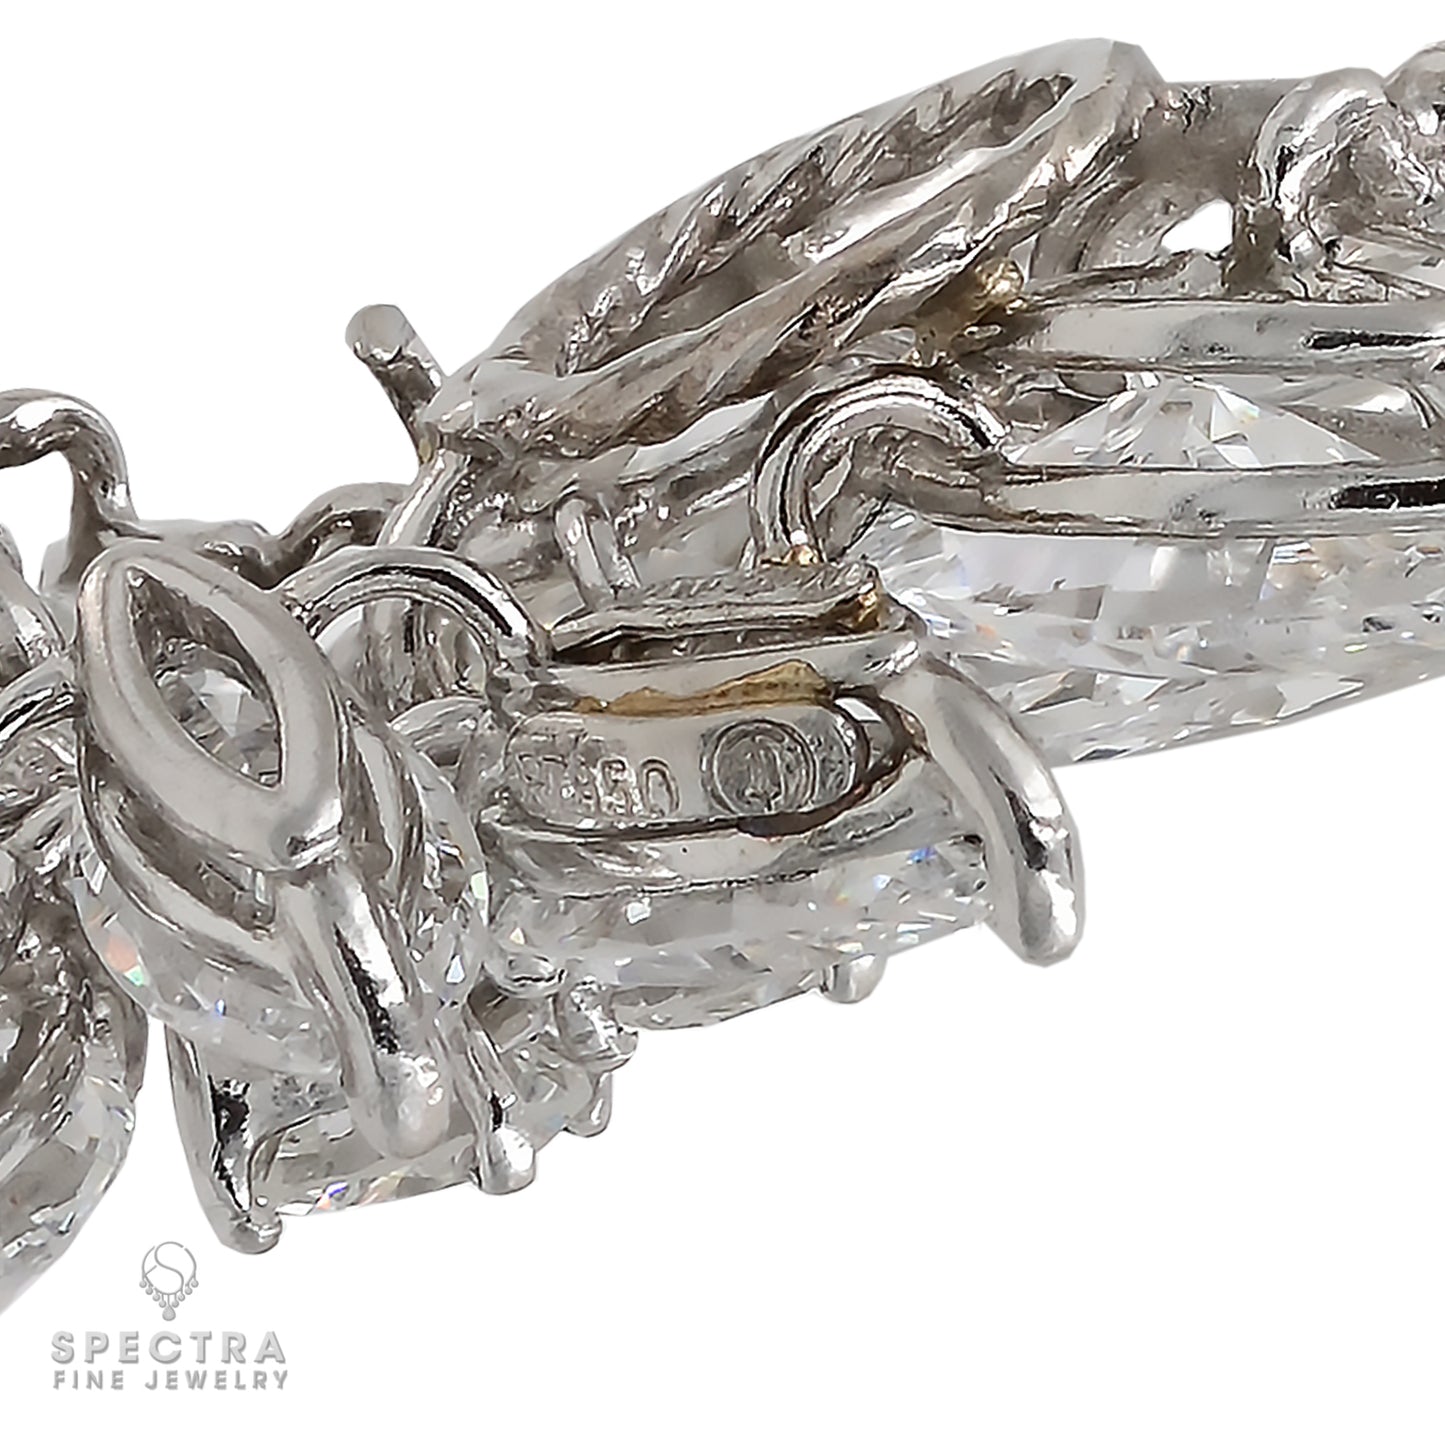 Harry Winston 19cts Diamond Cluster Earrings in 18K White Gold